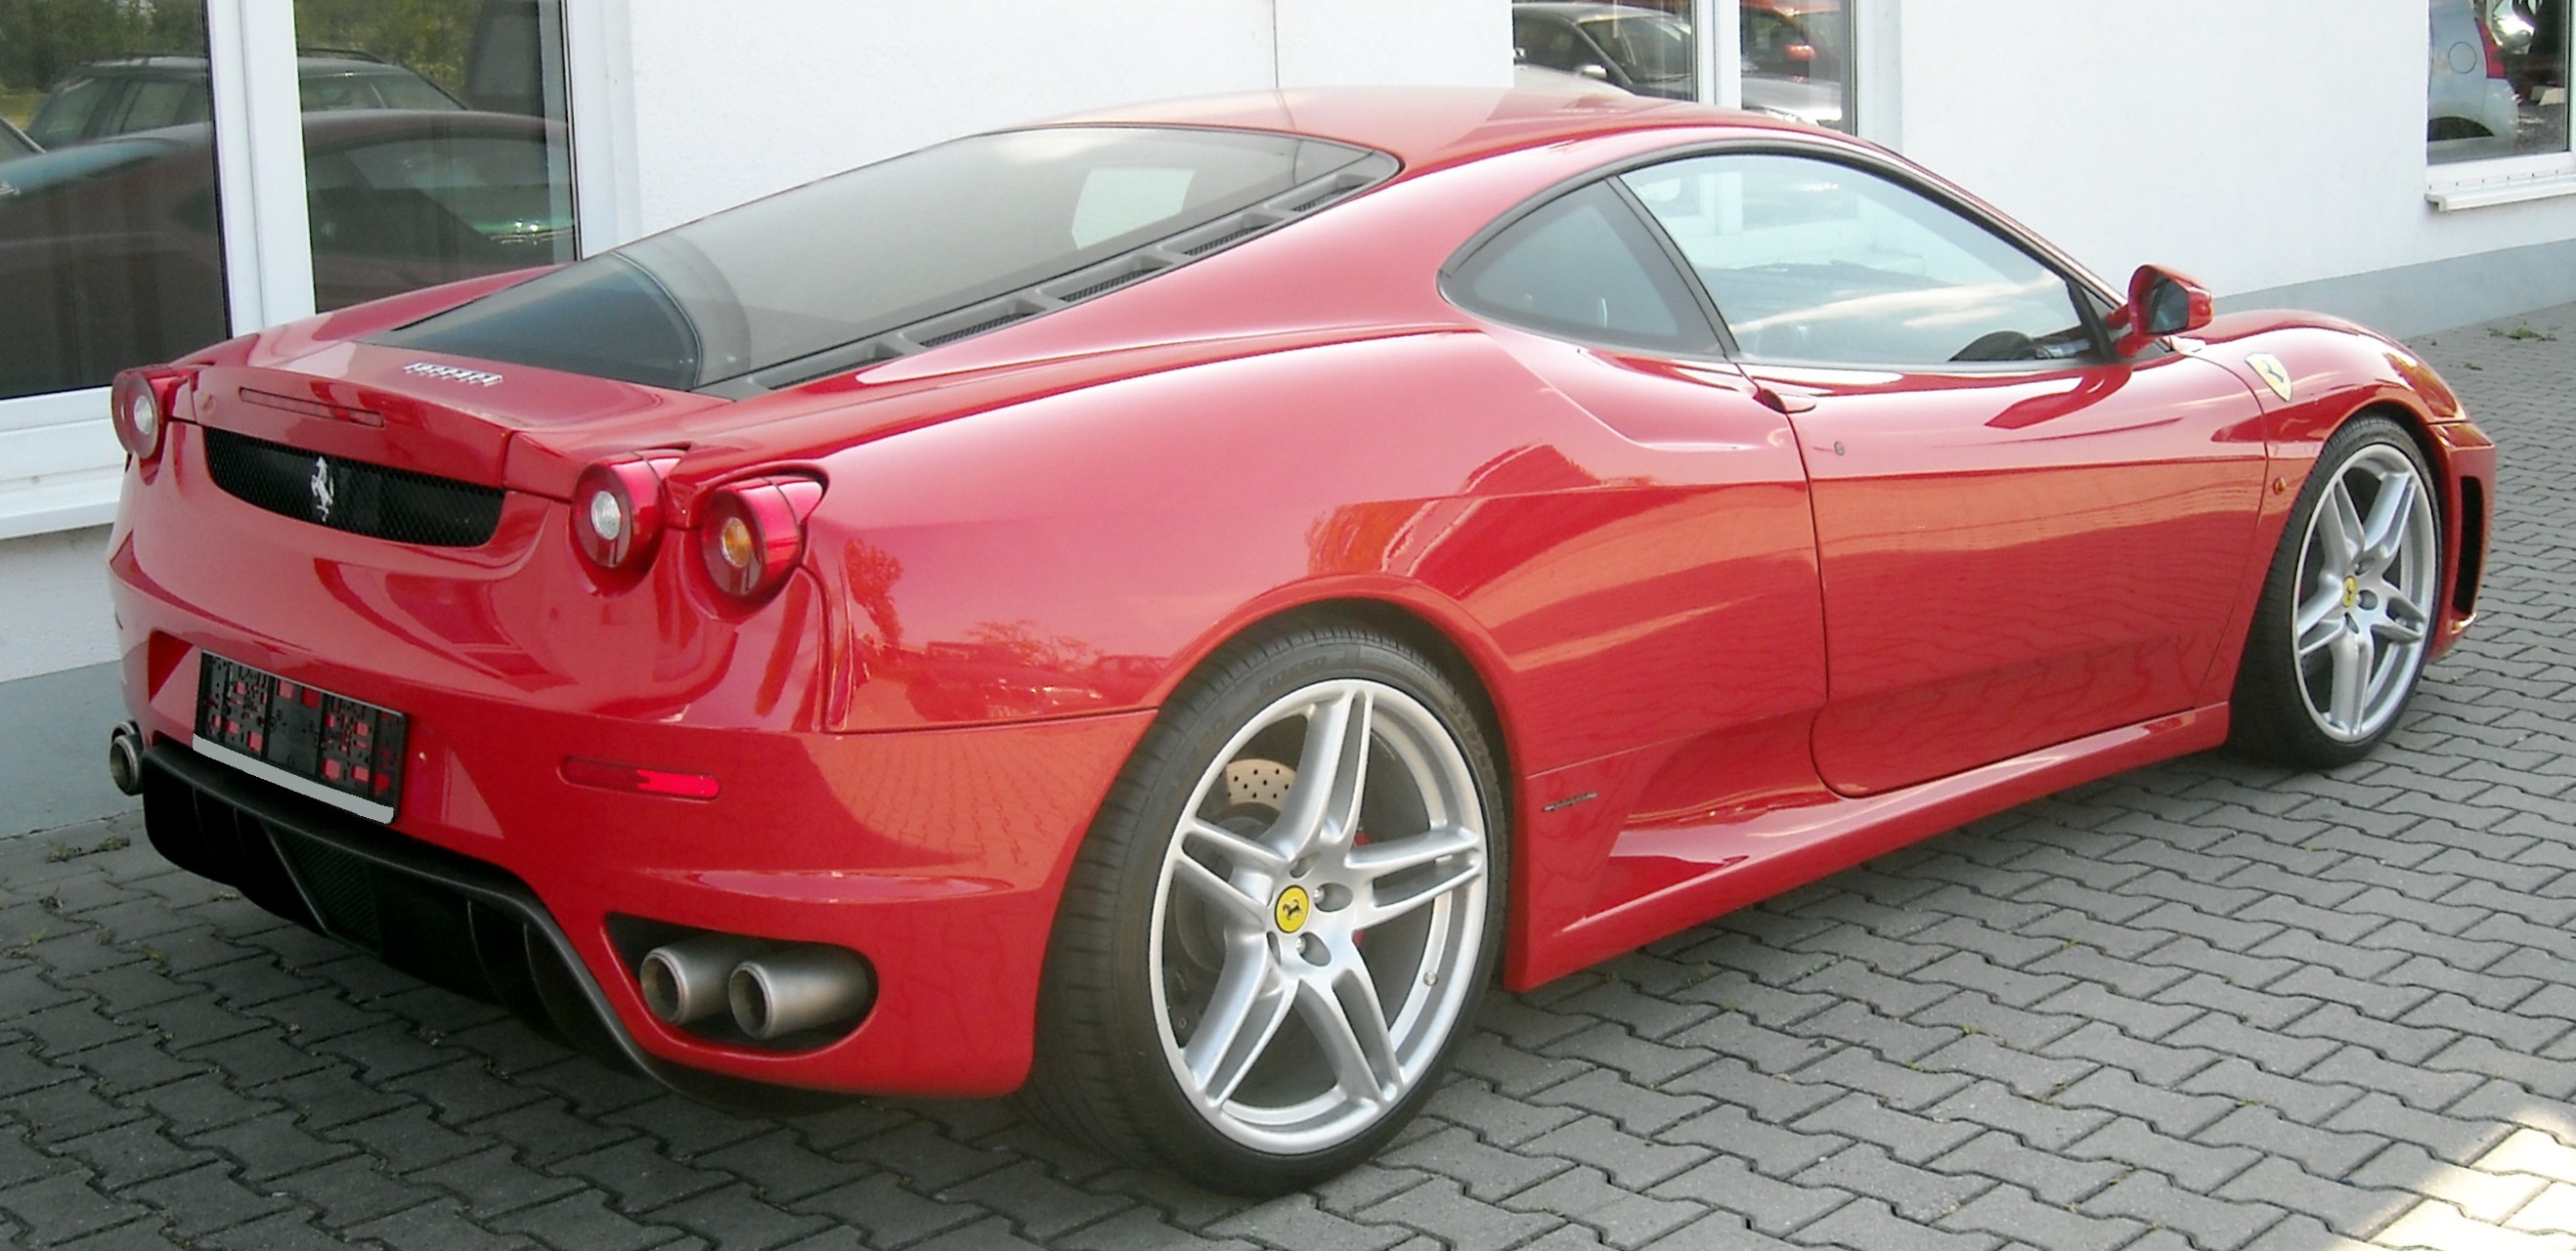  190.000 TL'ye Ferrari alırmıydınız?